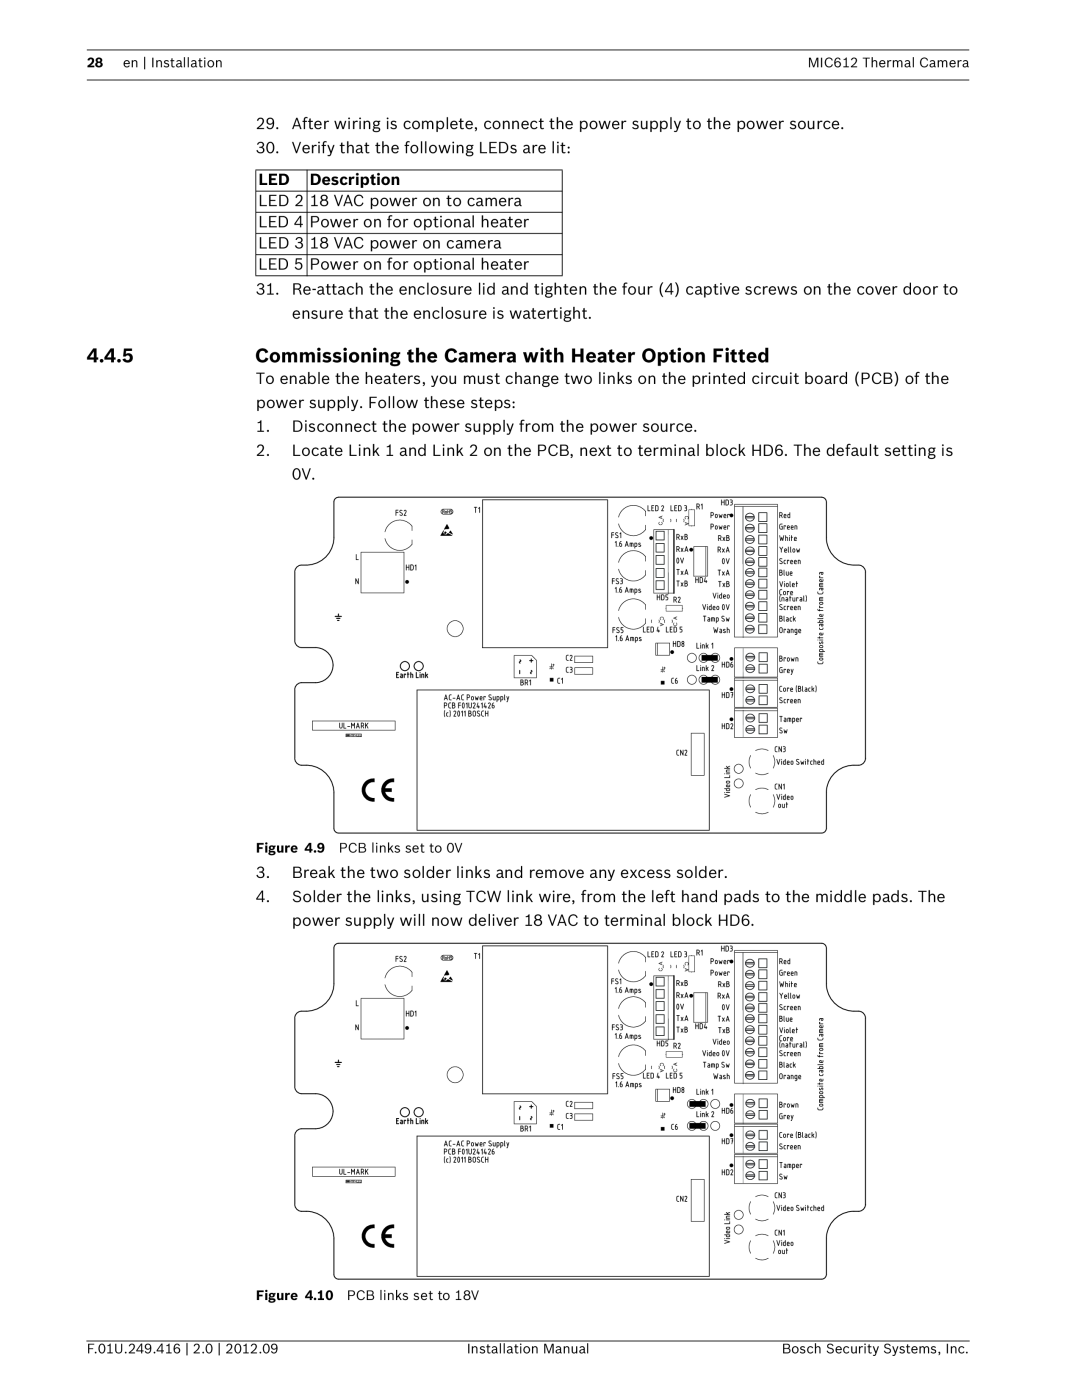 Bosch Appliances MIC612 installation manual 4.4.5, LED Description 